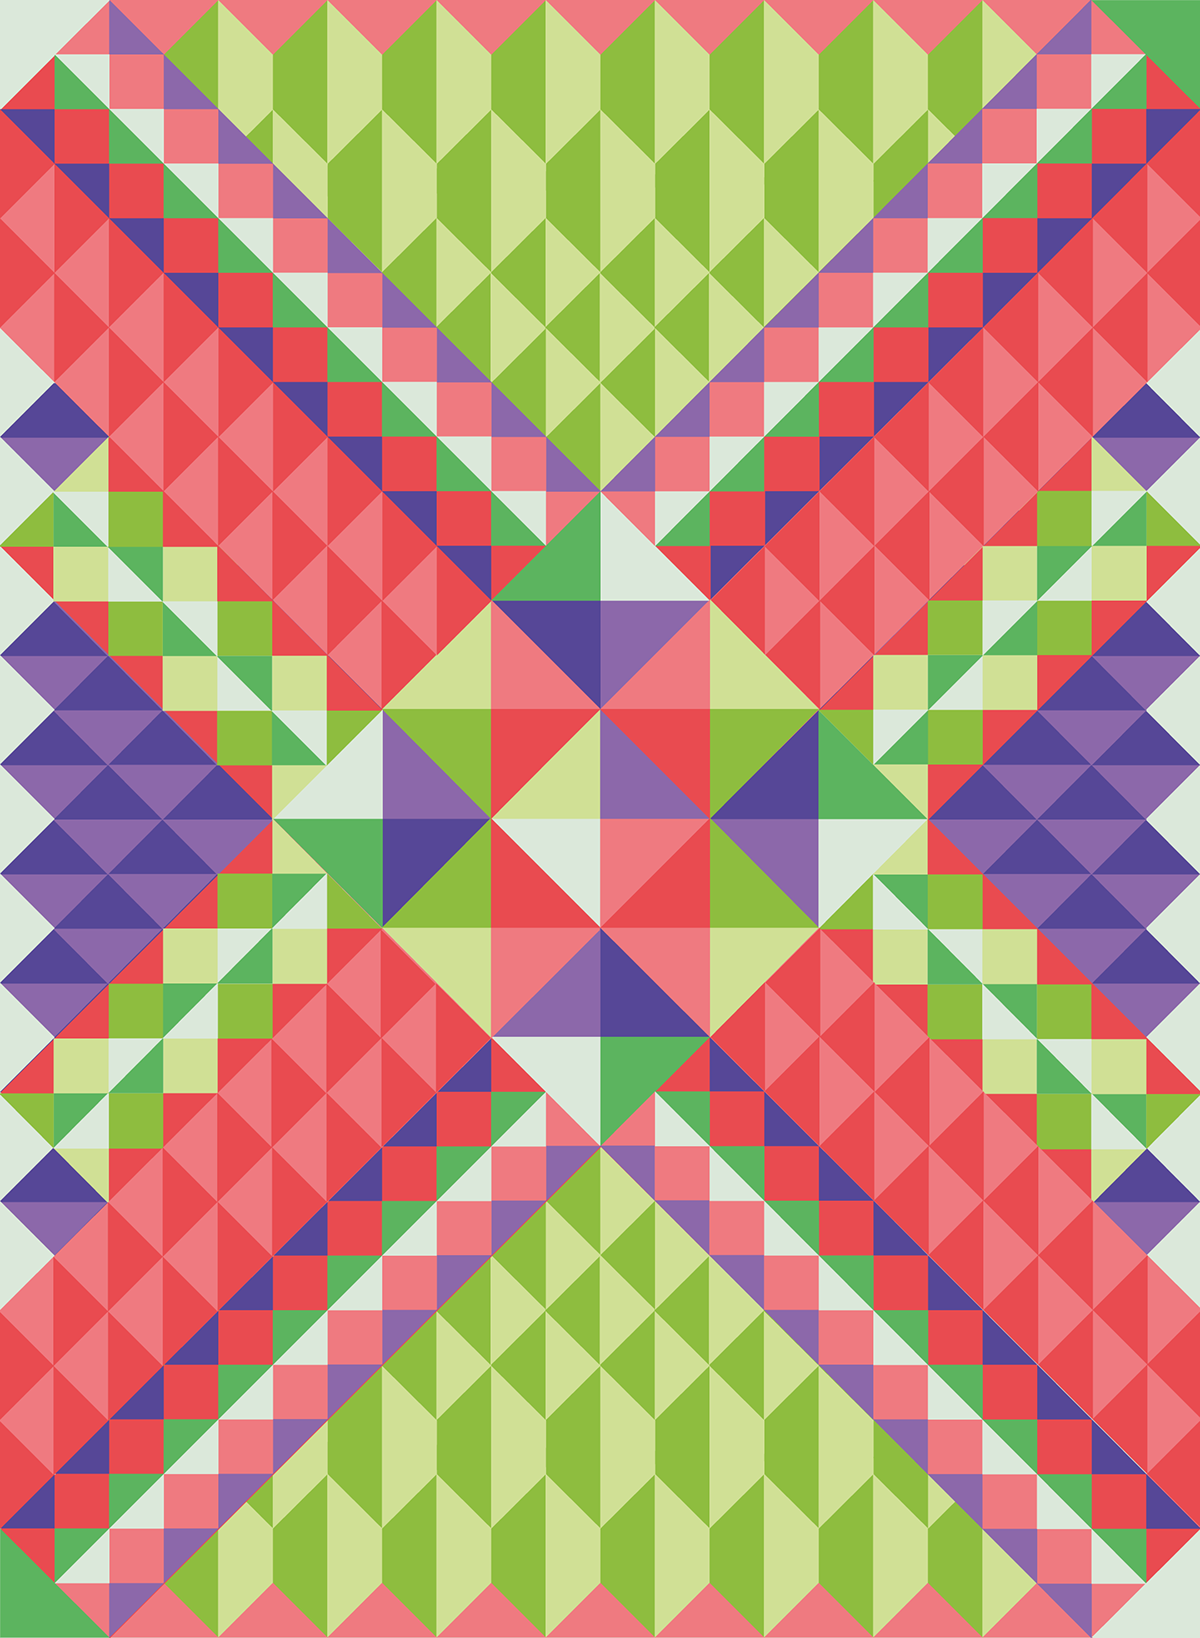 porter robinson flicker geometric art Polygons polygon florian Dangel FDCrea